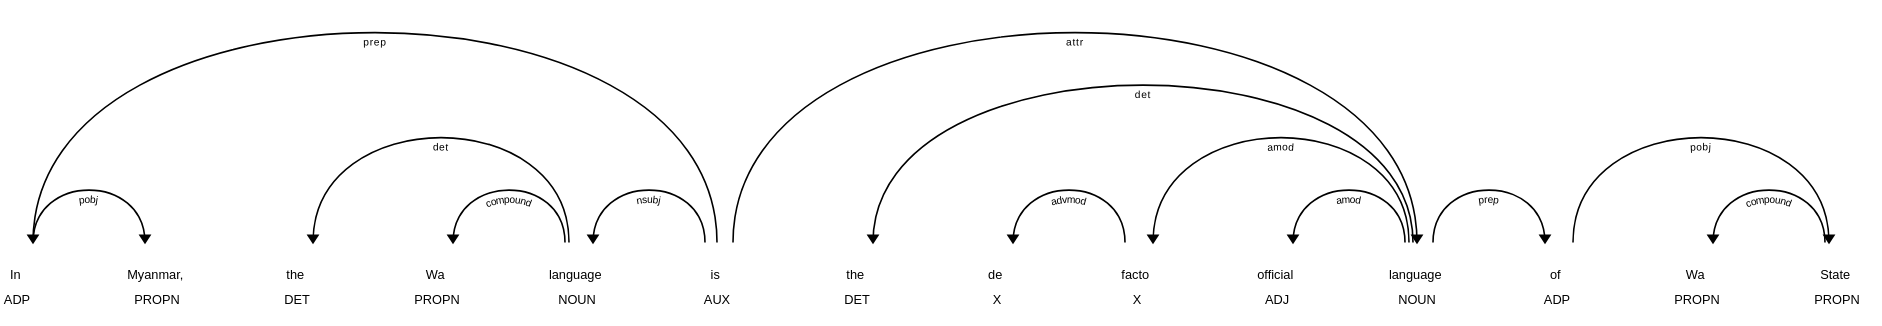 example_dependency_tree